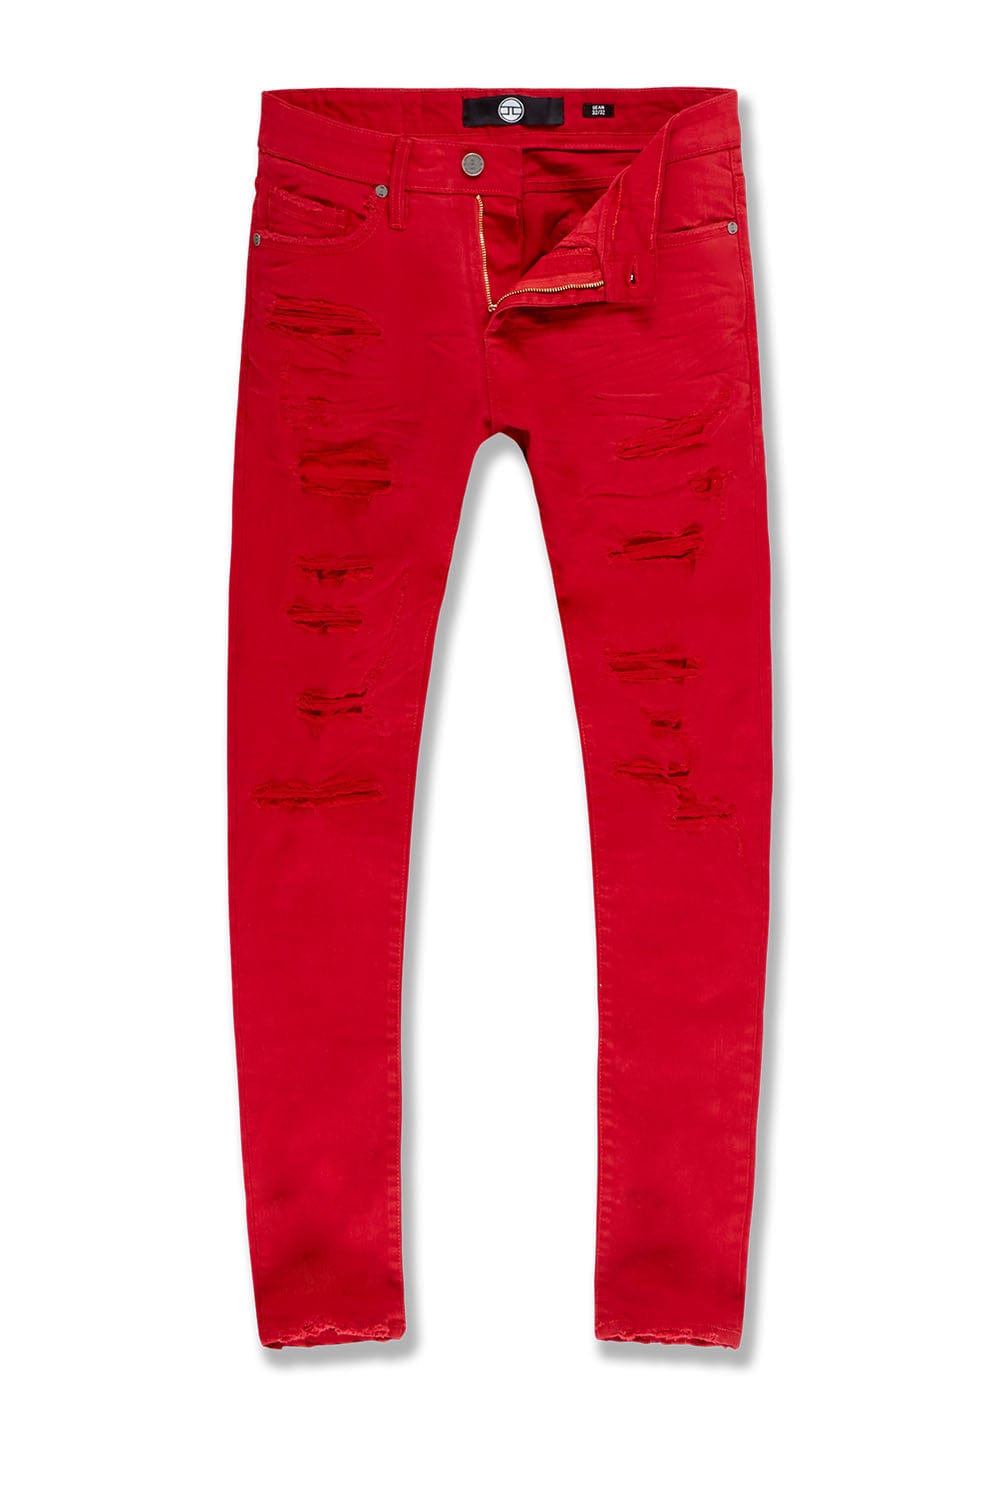 Jordan Craig Sean - Tribeca Twill Pants (Red) Red / 30/32